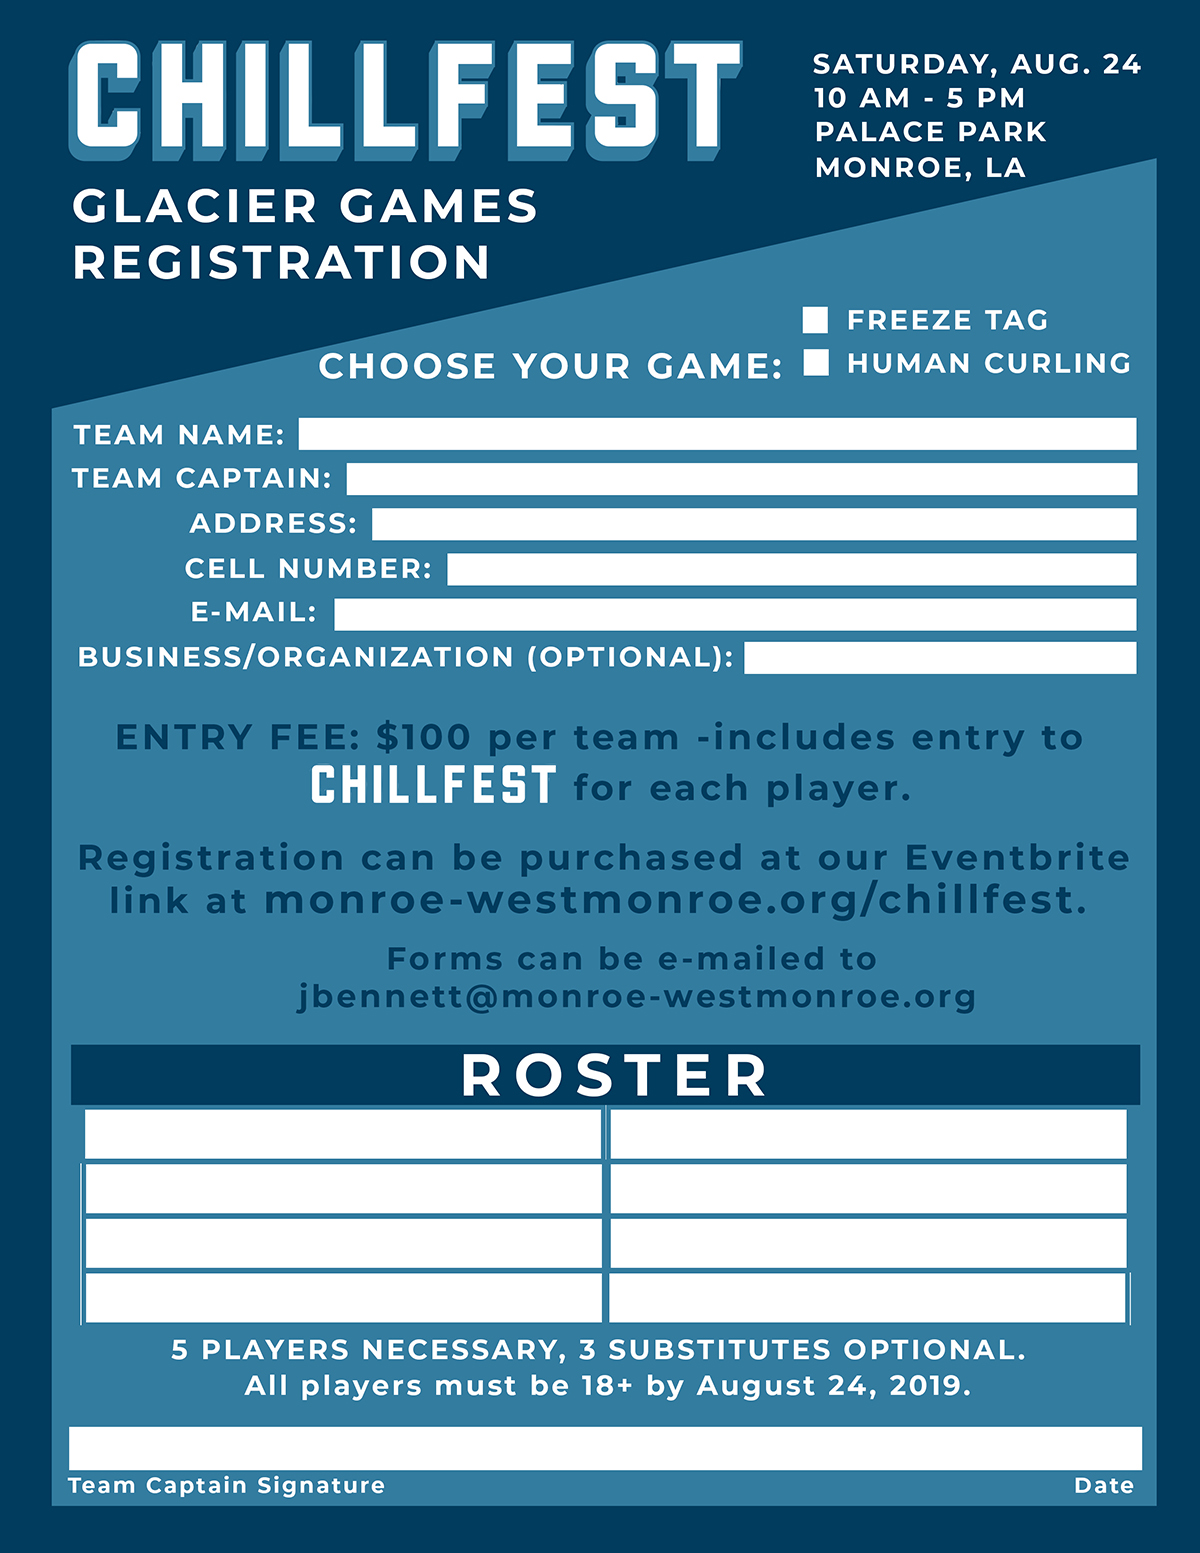 Glacier Games Registration Form, Freeze Tag, Human Curling, Monroe, LA